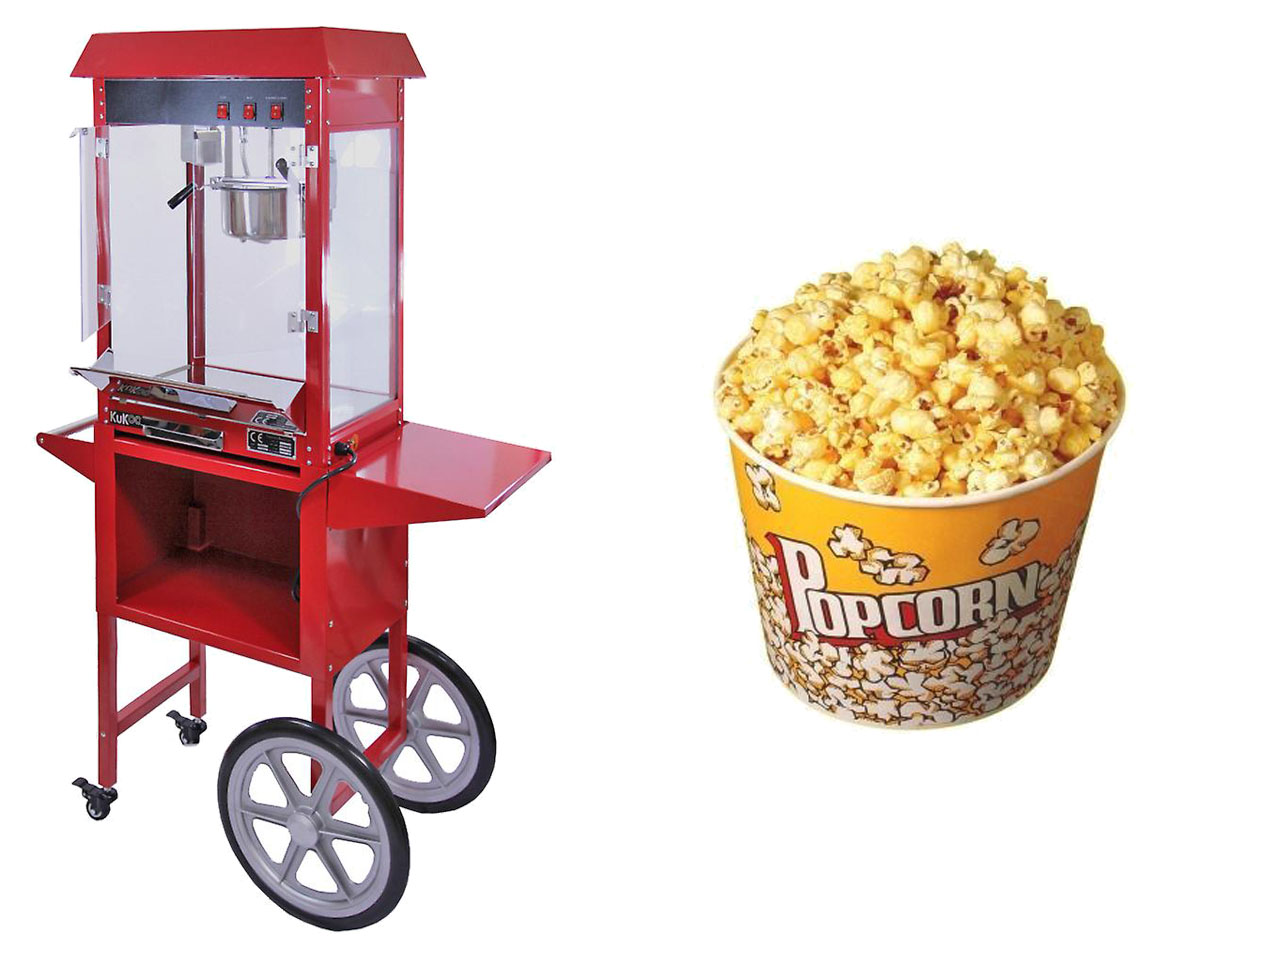 popcorn image 1